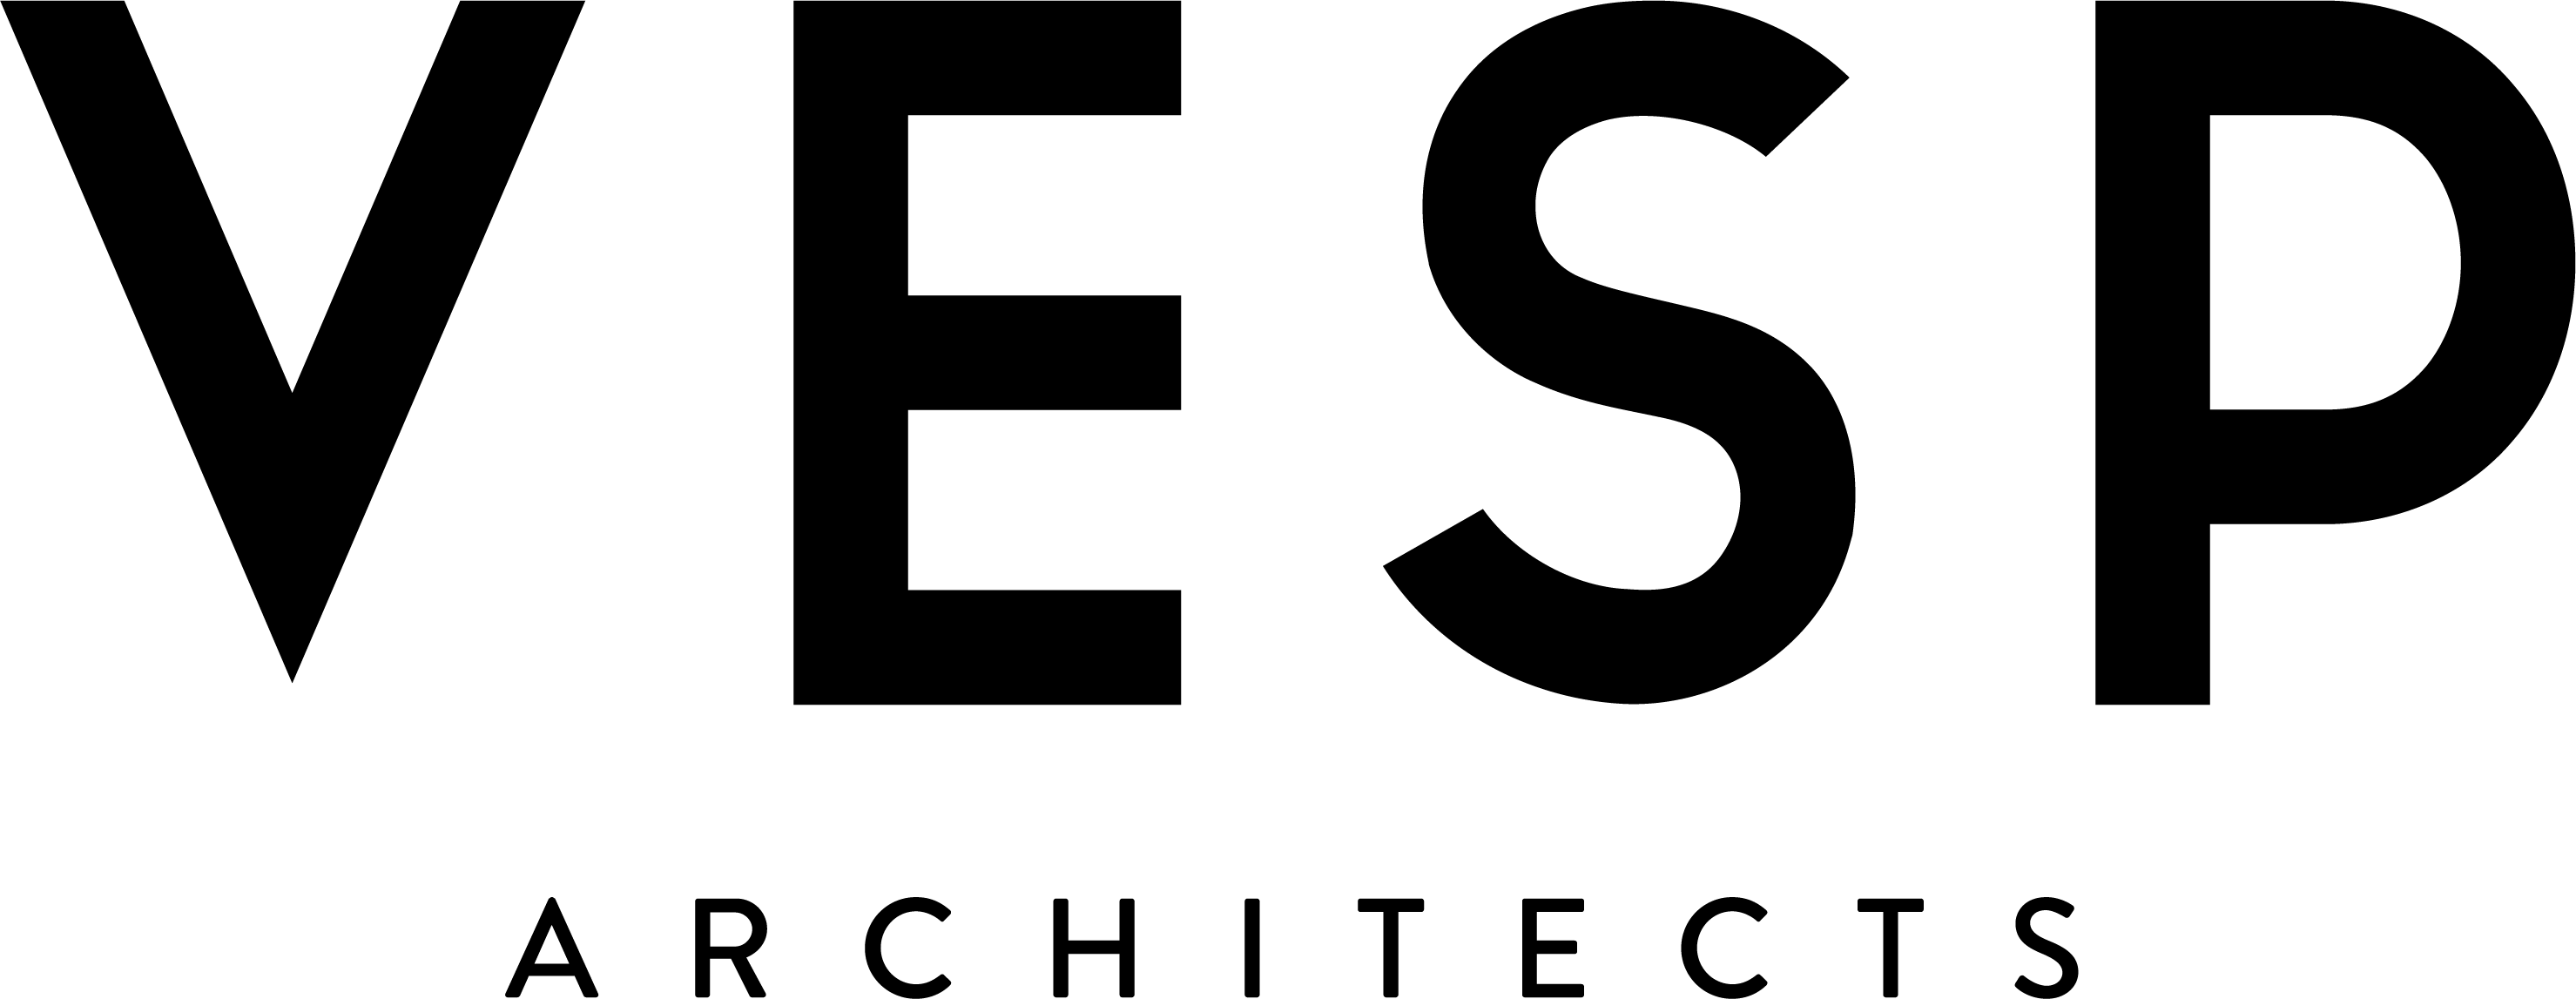 VESP logo